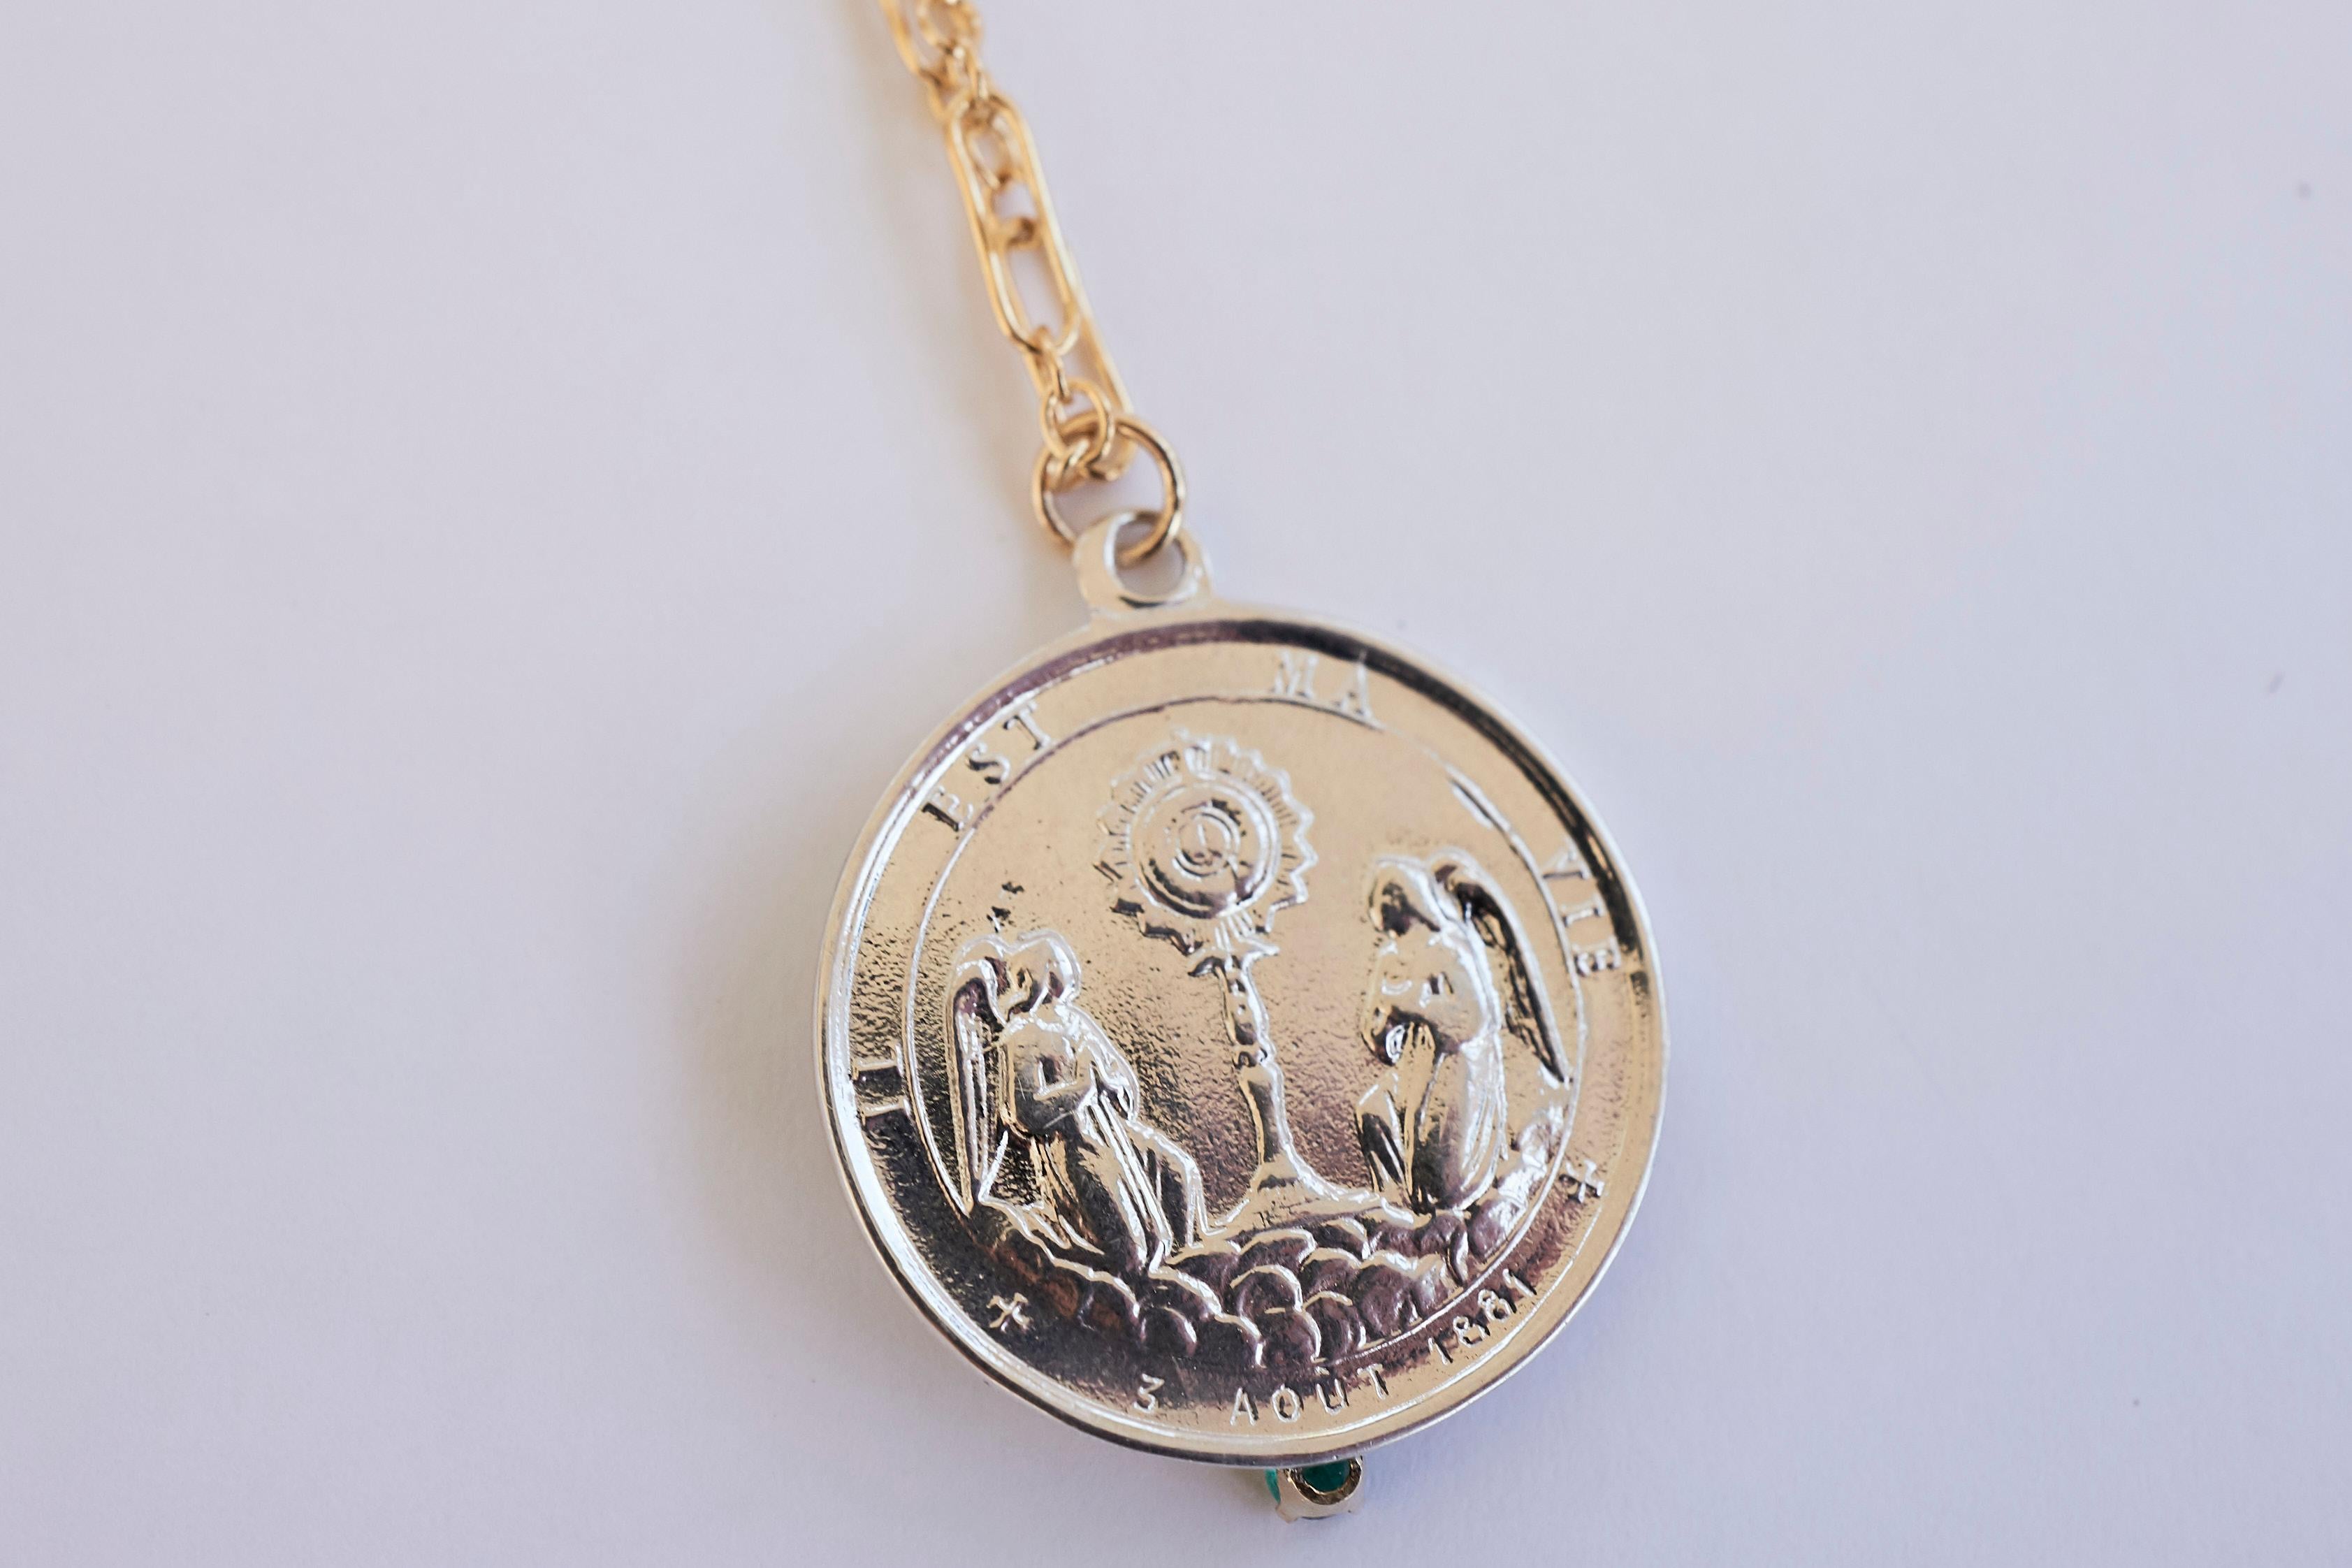 Brilliant Cut Emerald Saint Medal Coin Silver Jeanne Le Mat Necklace Chain J Dauphin For Sale